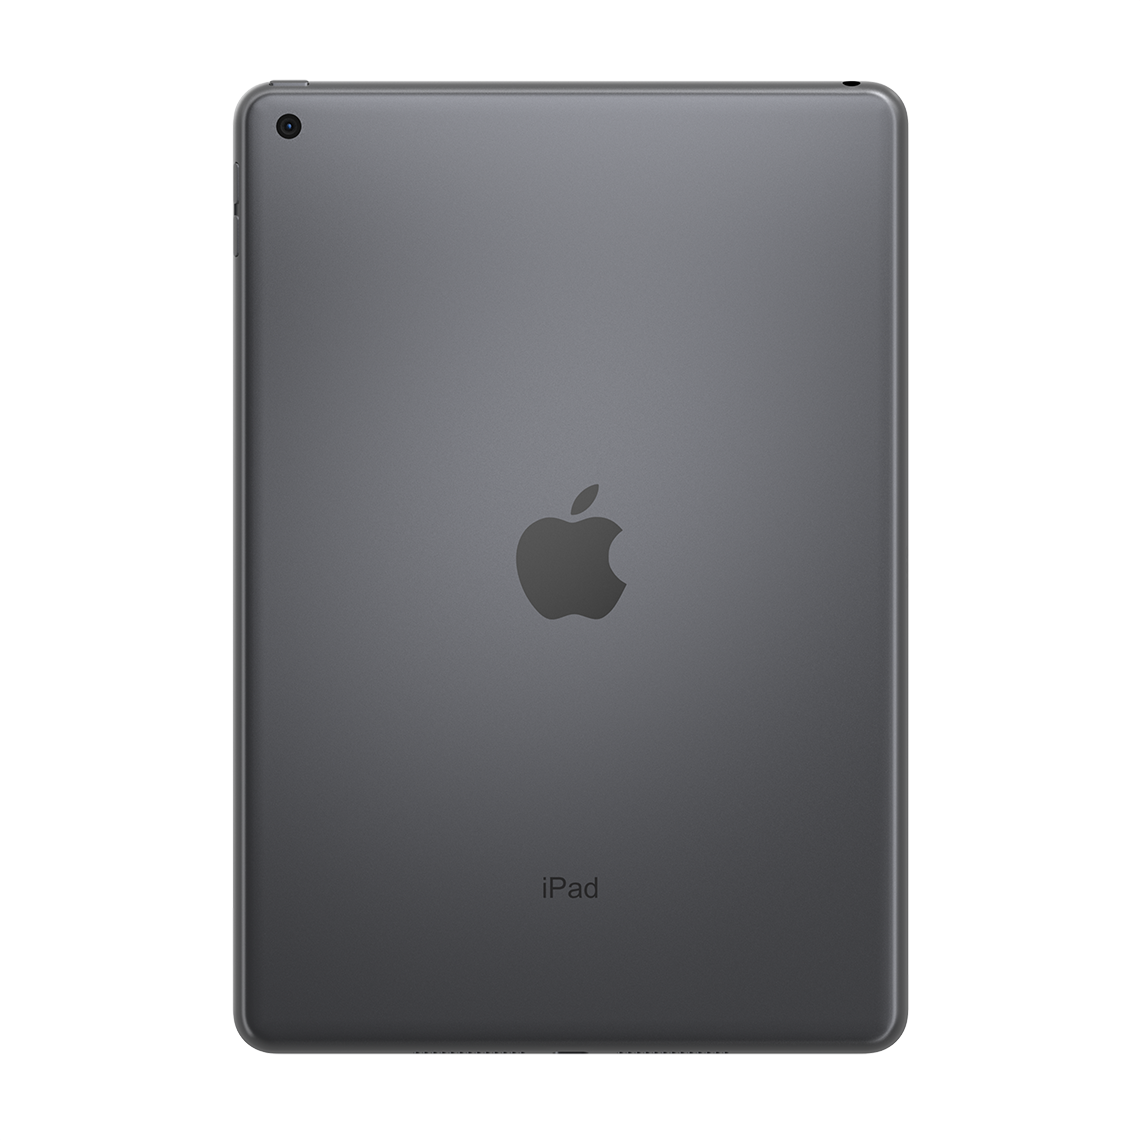 Apple iPad 10.2-inch 9th Generation - Space Gray - 256GB, Wi-Fi + Cellular, Grade A